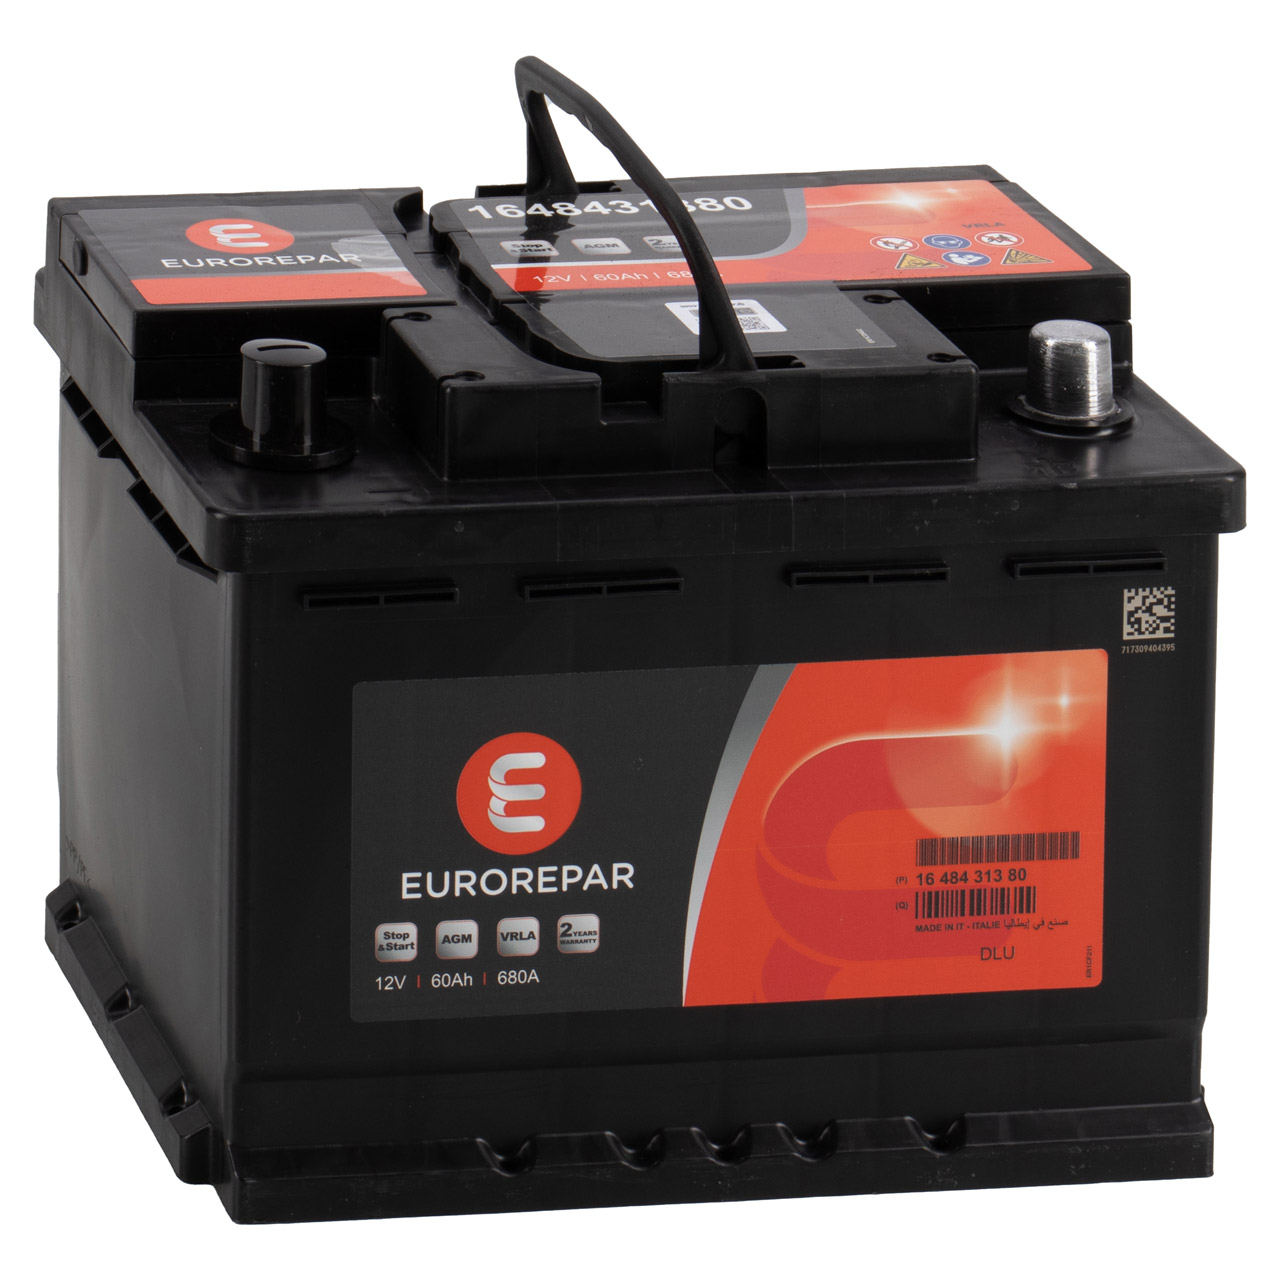 EUROREPAR Starterbatterien / Autobatterien - 16 484 313 80 